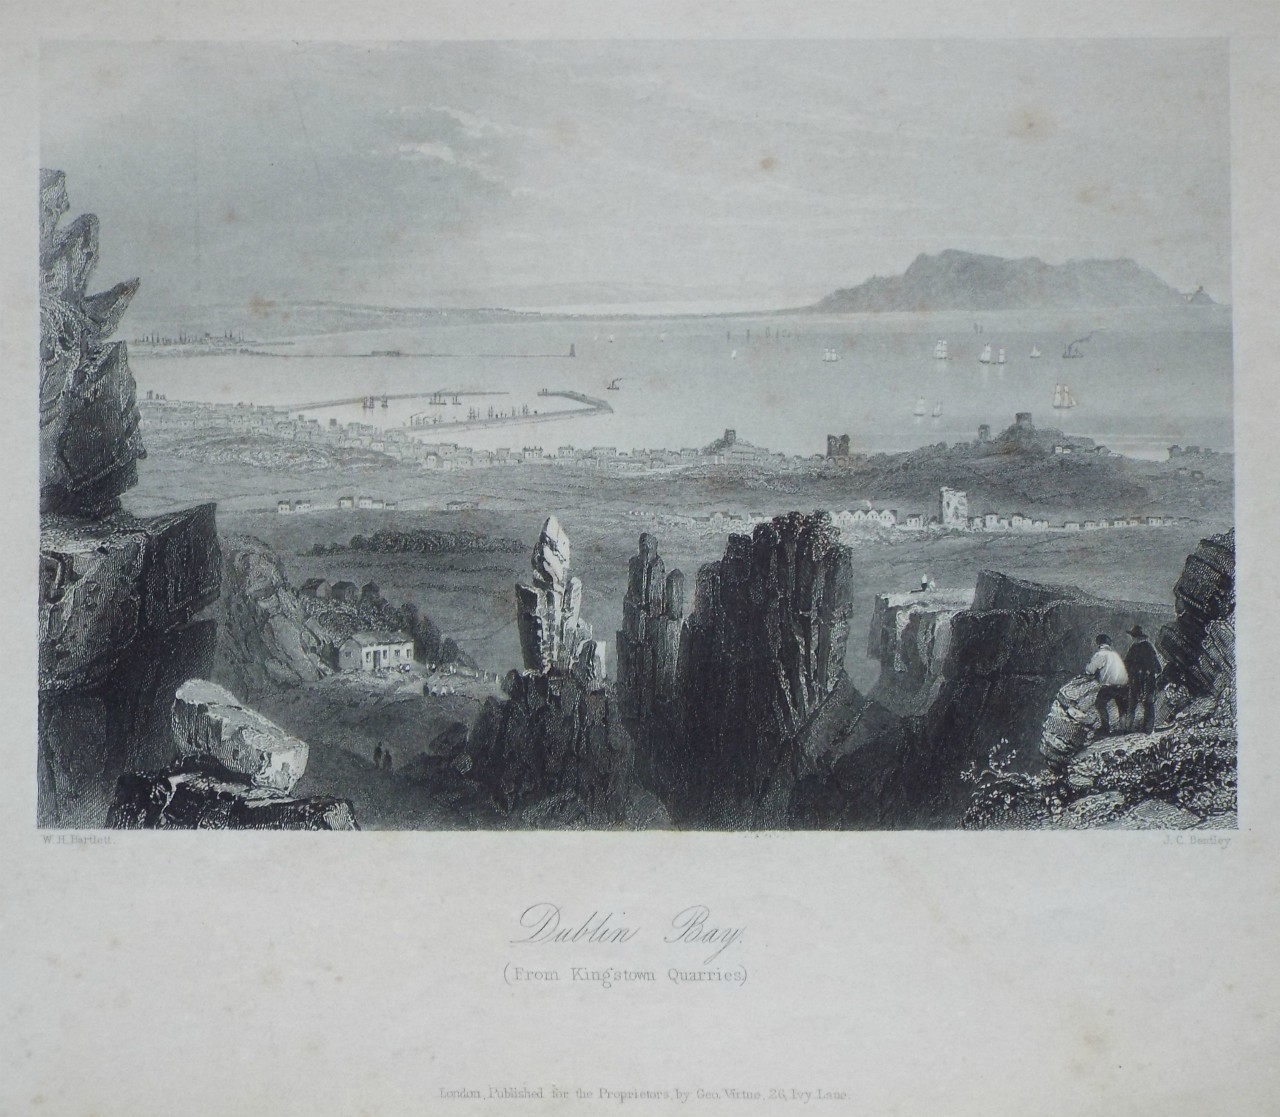 Print - Dublin Bay (From Kingstown Quarries) - Bentley